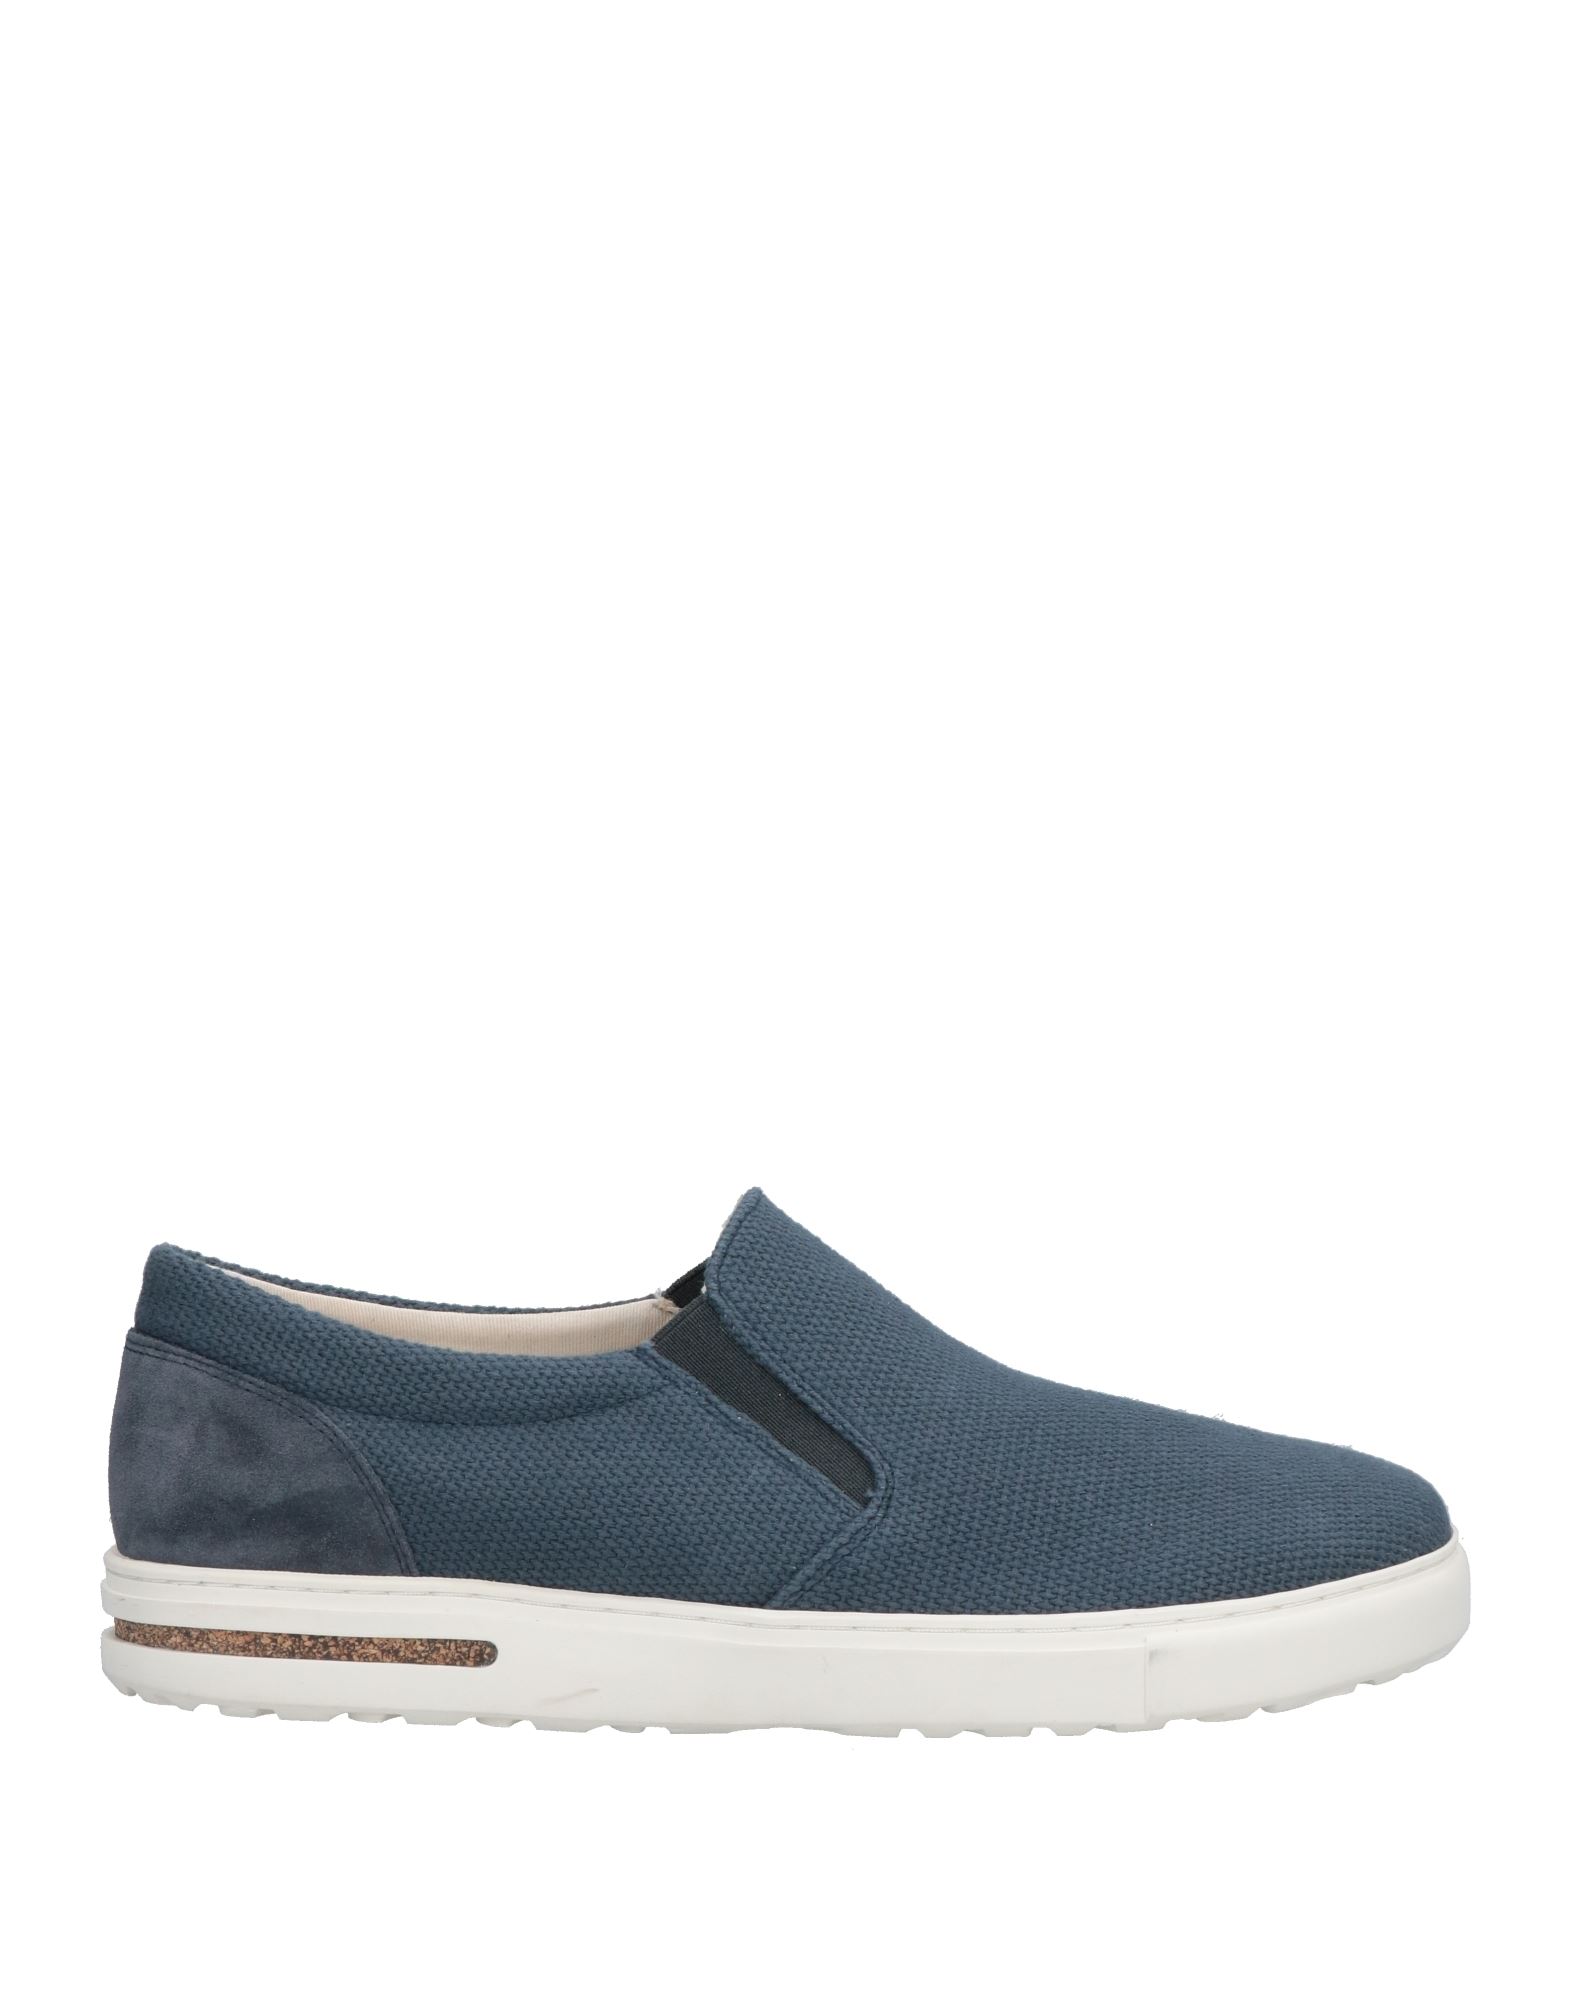 Shop Birkenstock Man Sneakers Navy Blue Size 5 Soft Leather, Textile Fibers